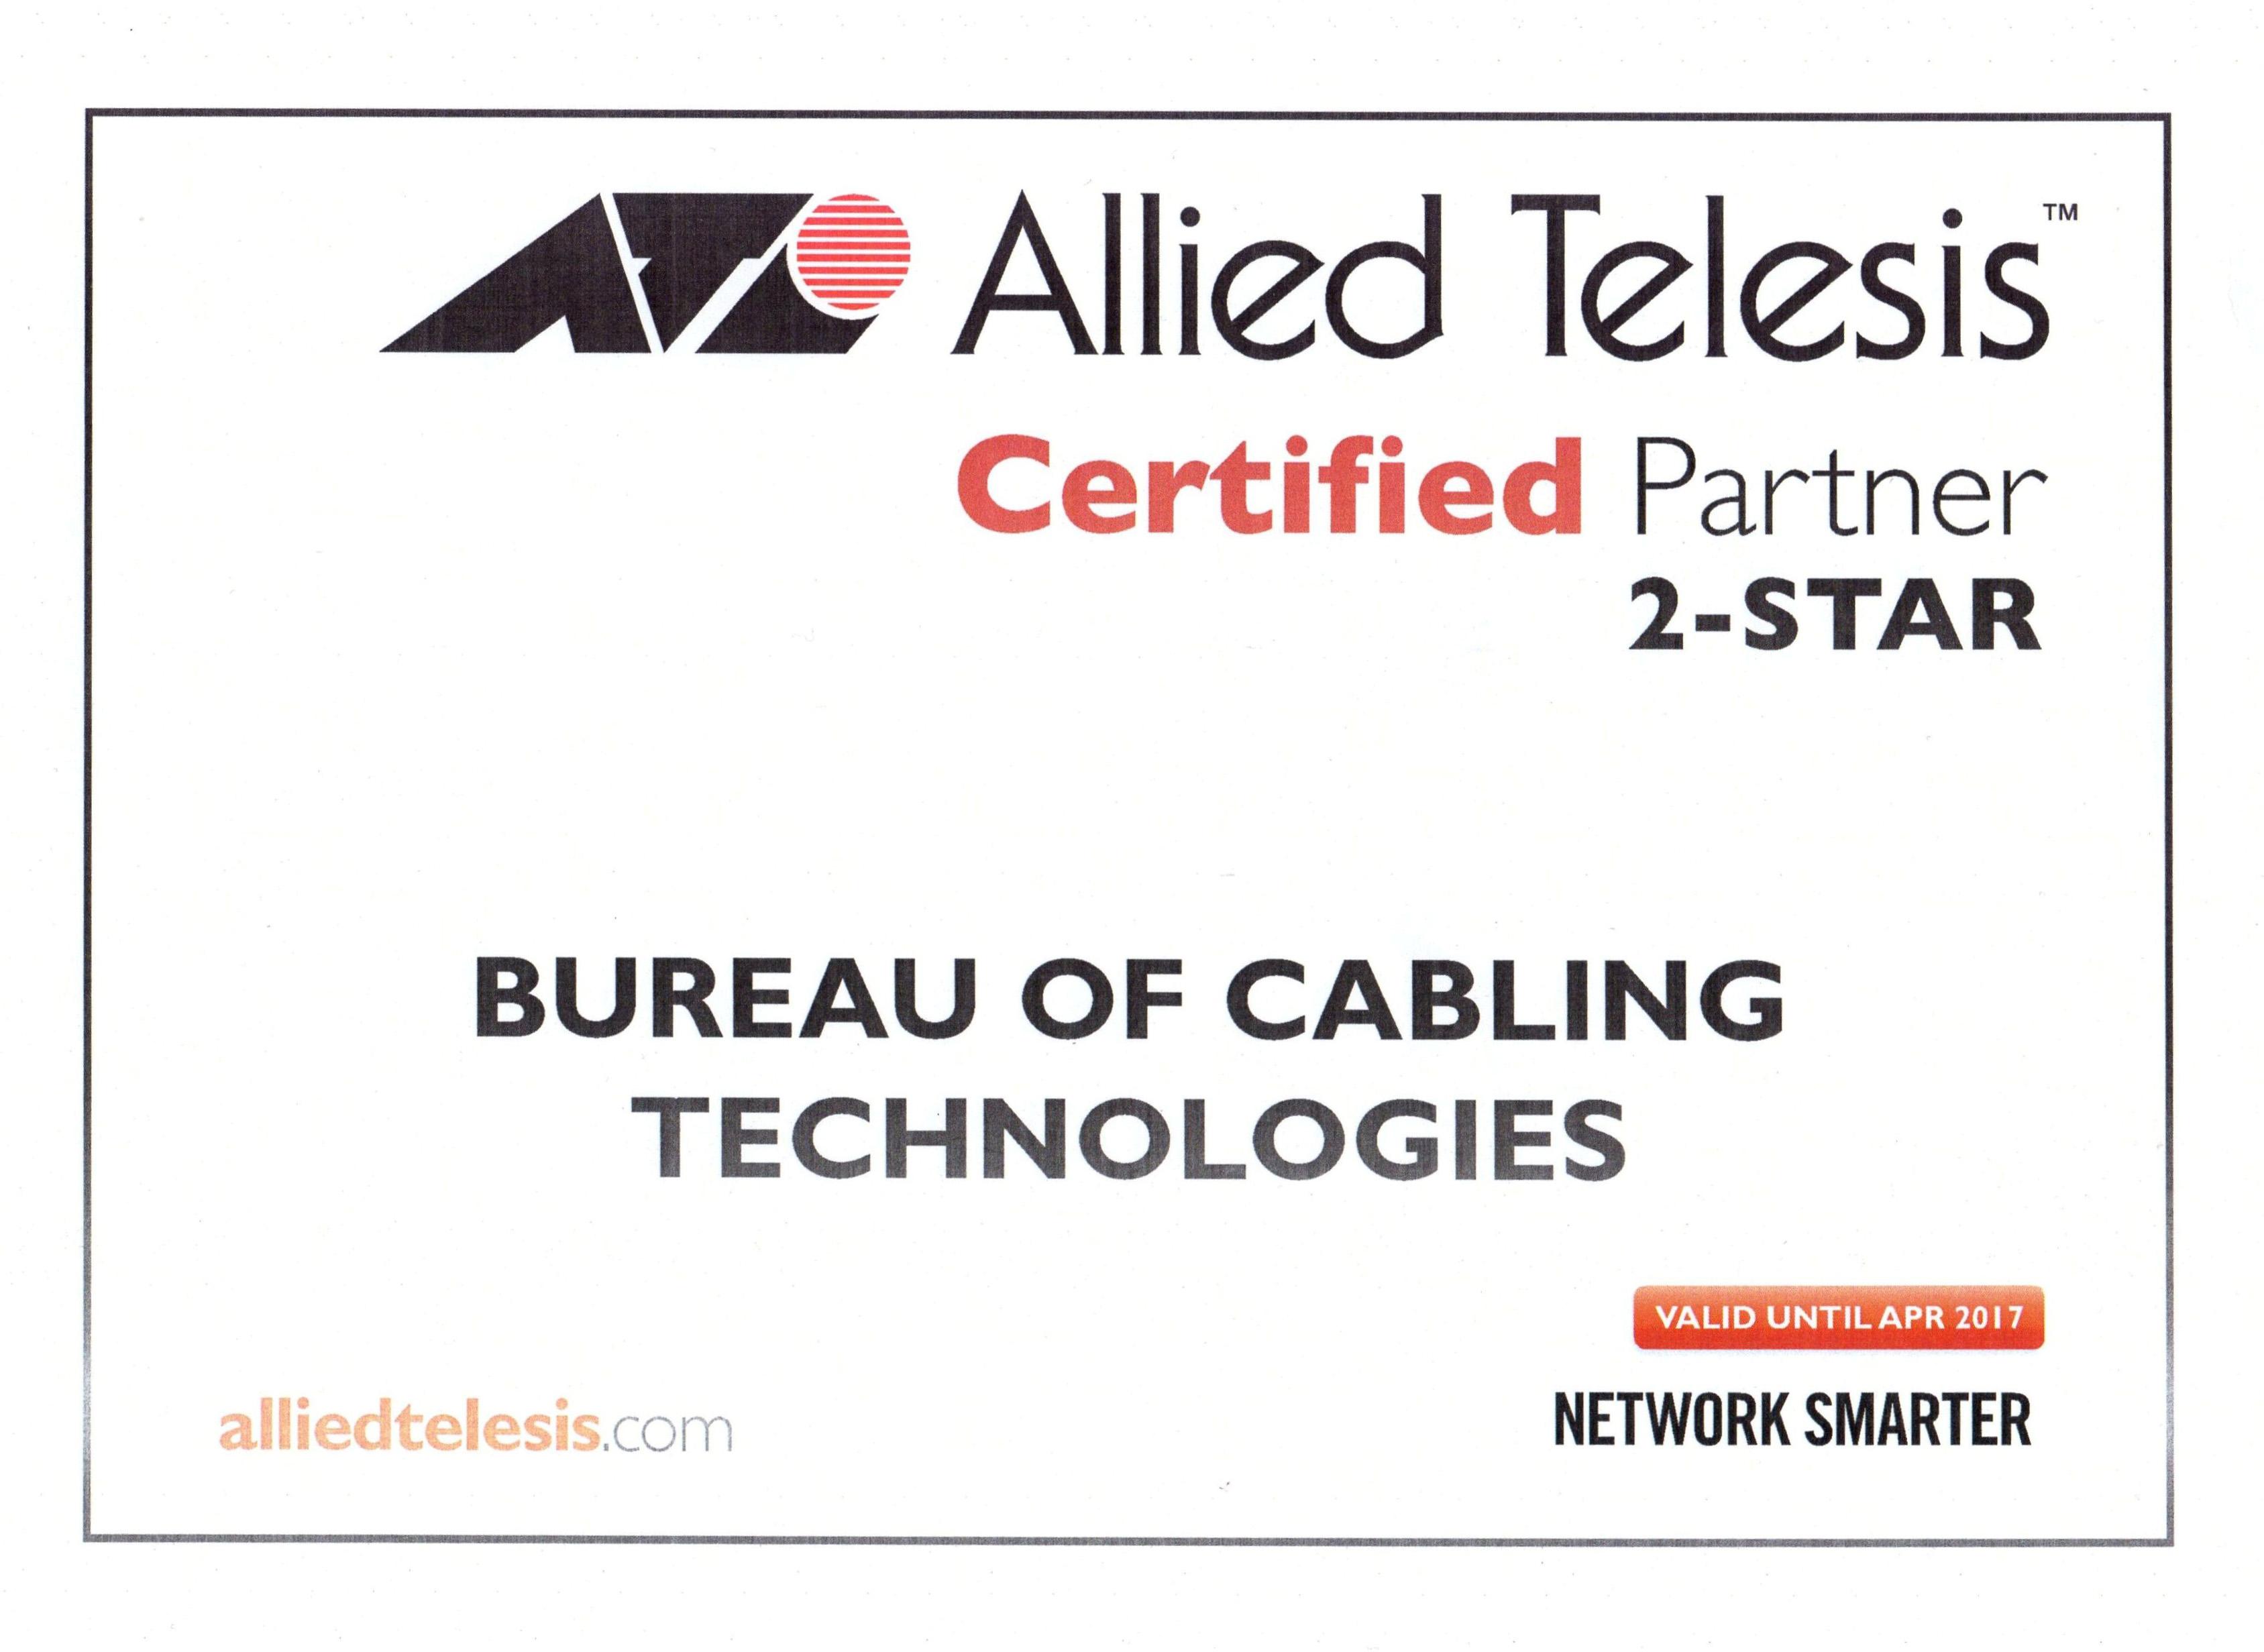 сертификат Allied Telesis